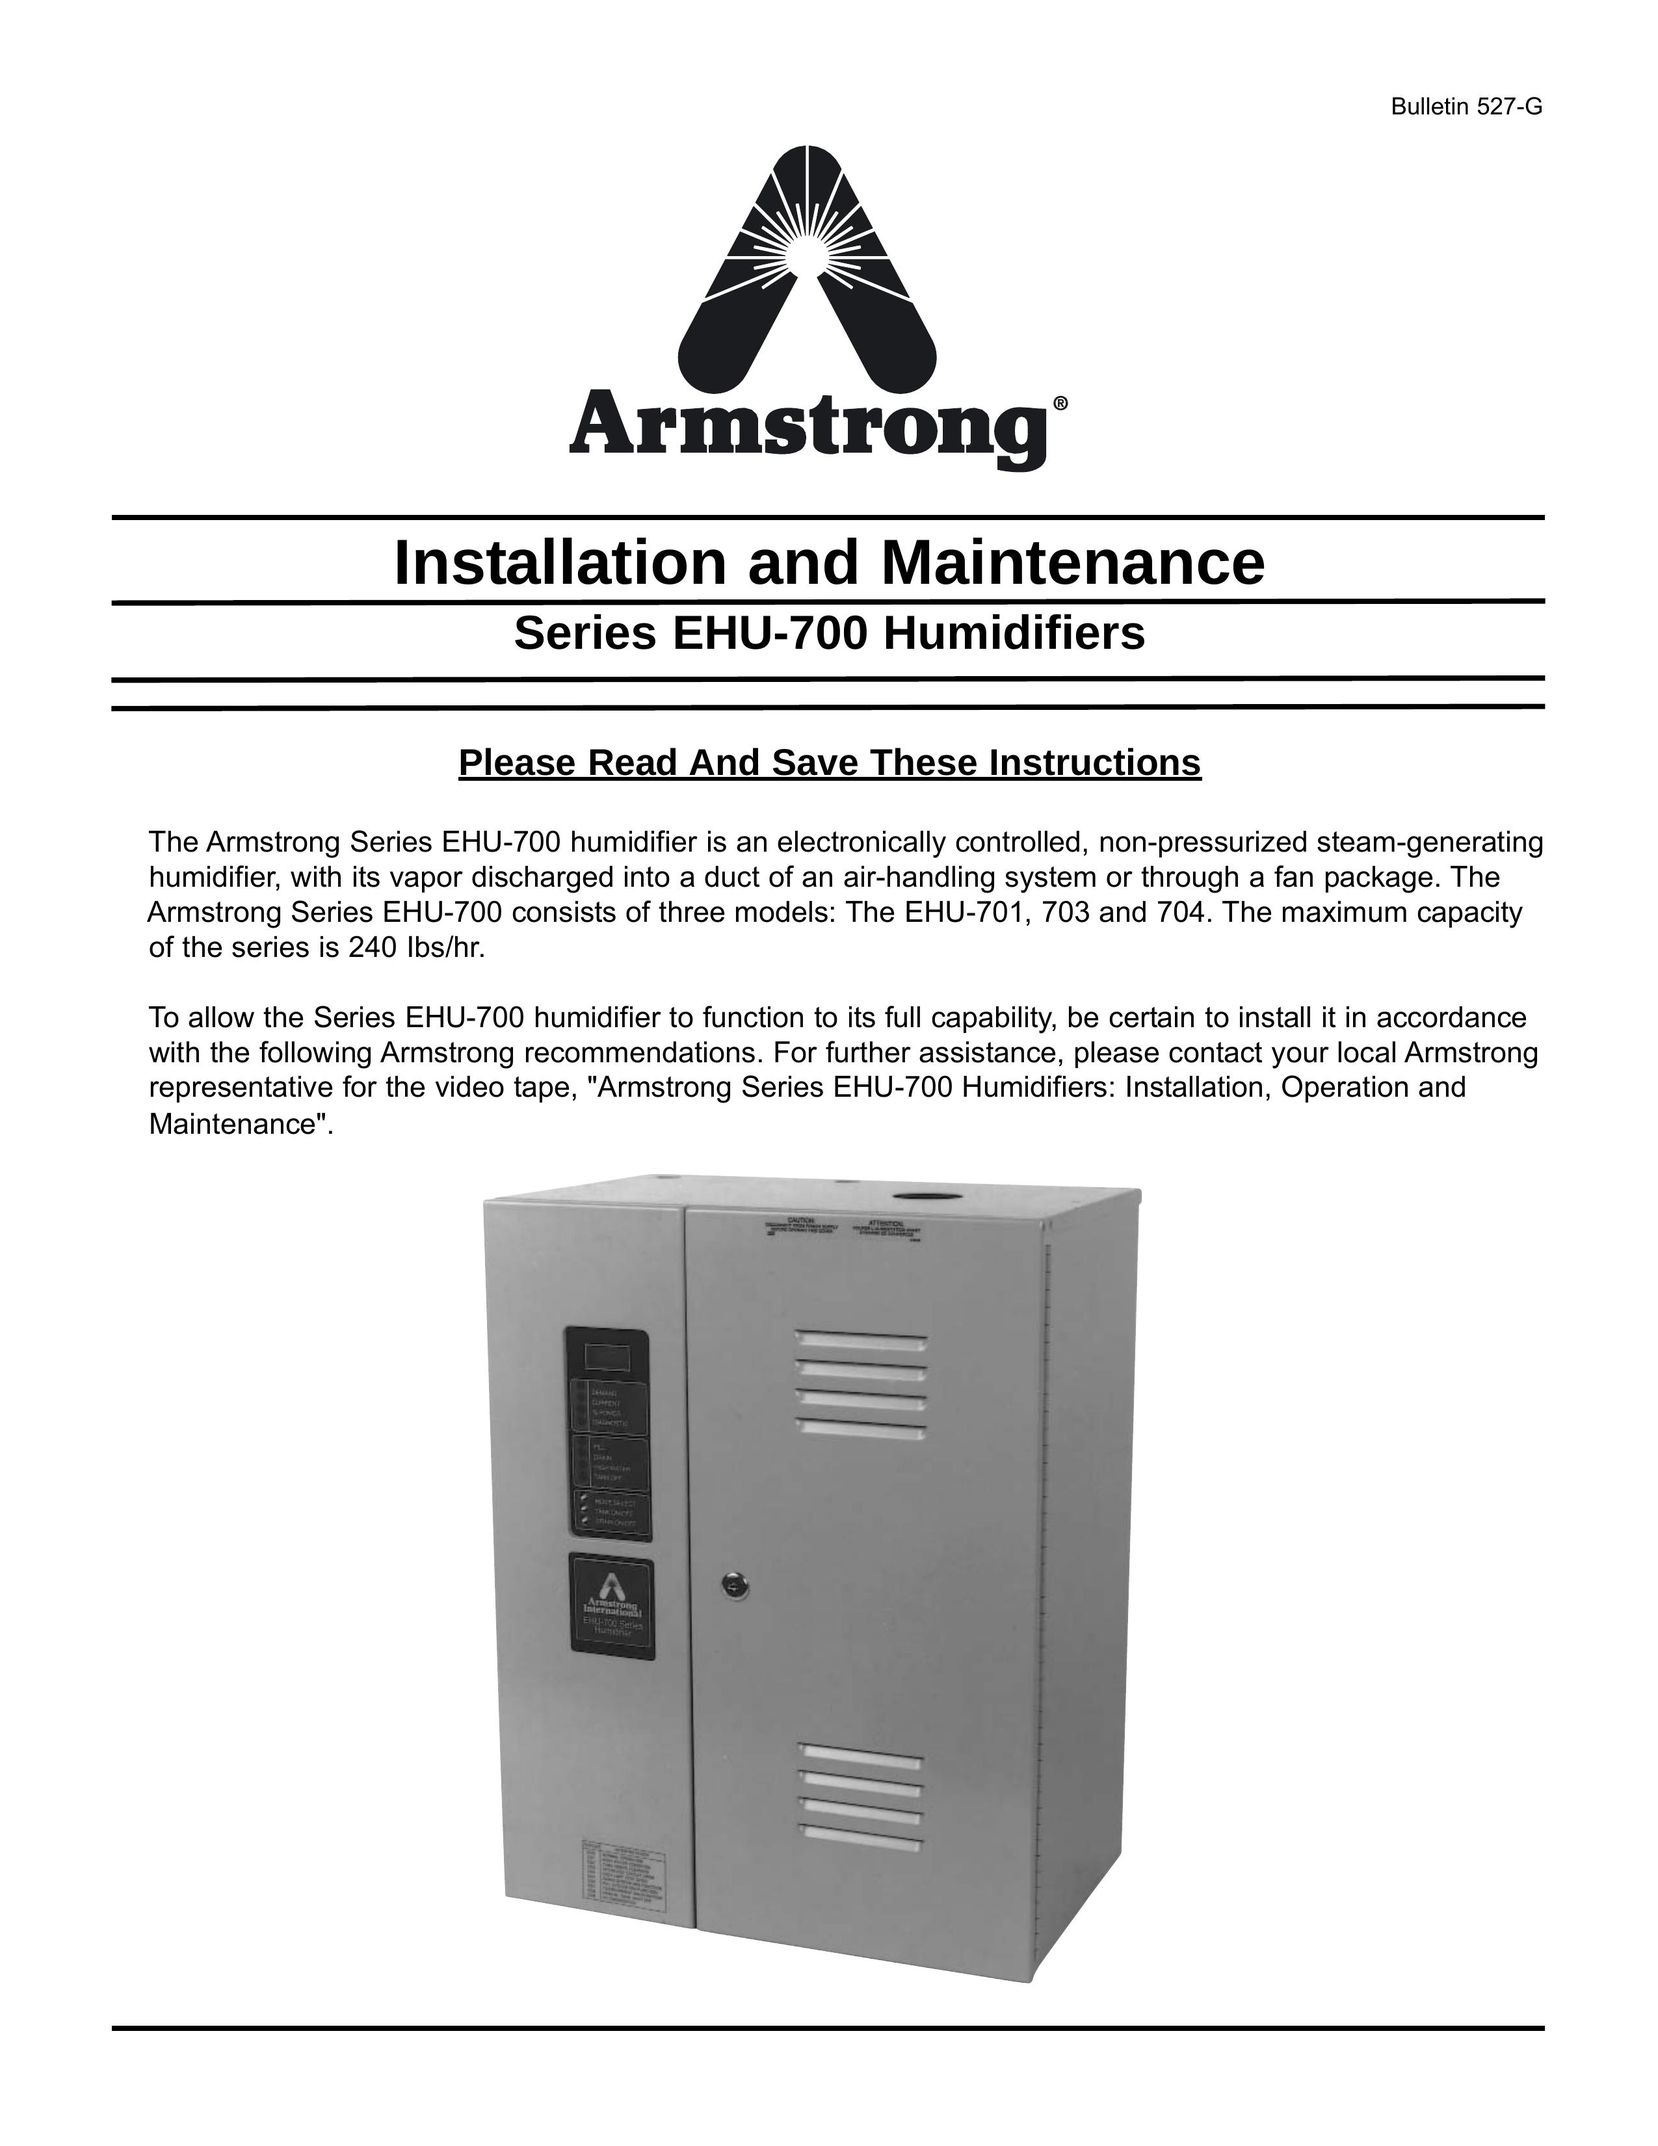 Armstrong World Industries EHU-703 Humidifier User Manual